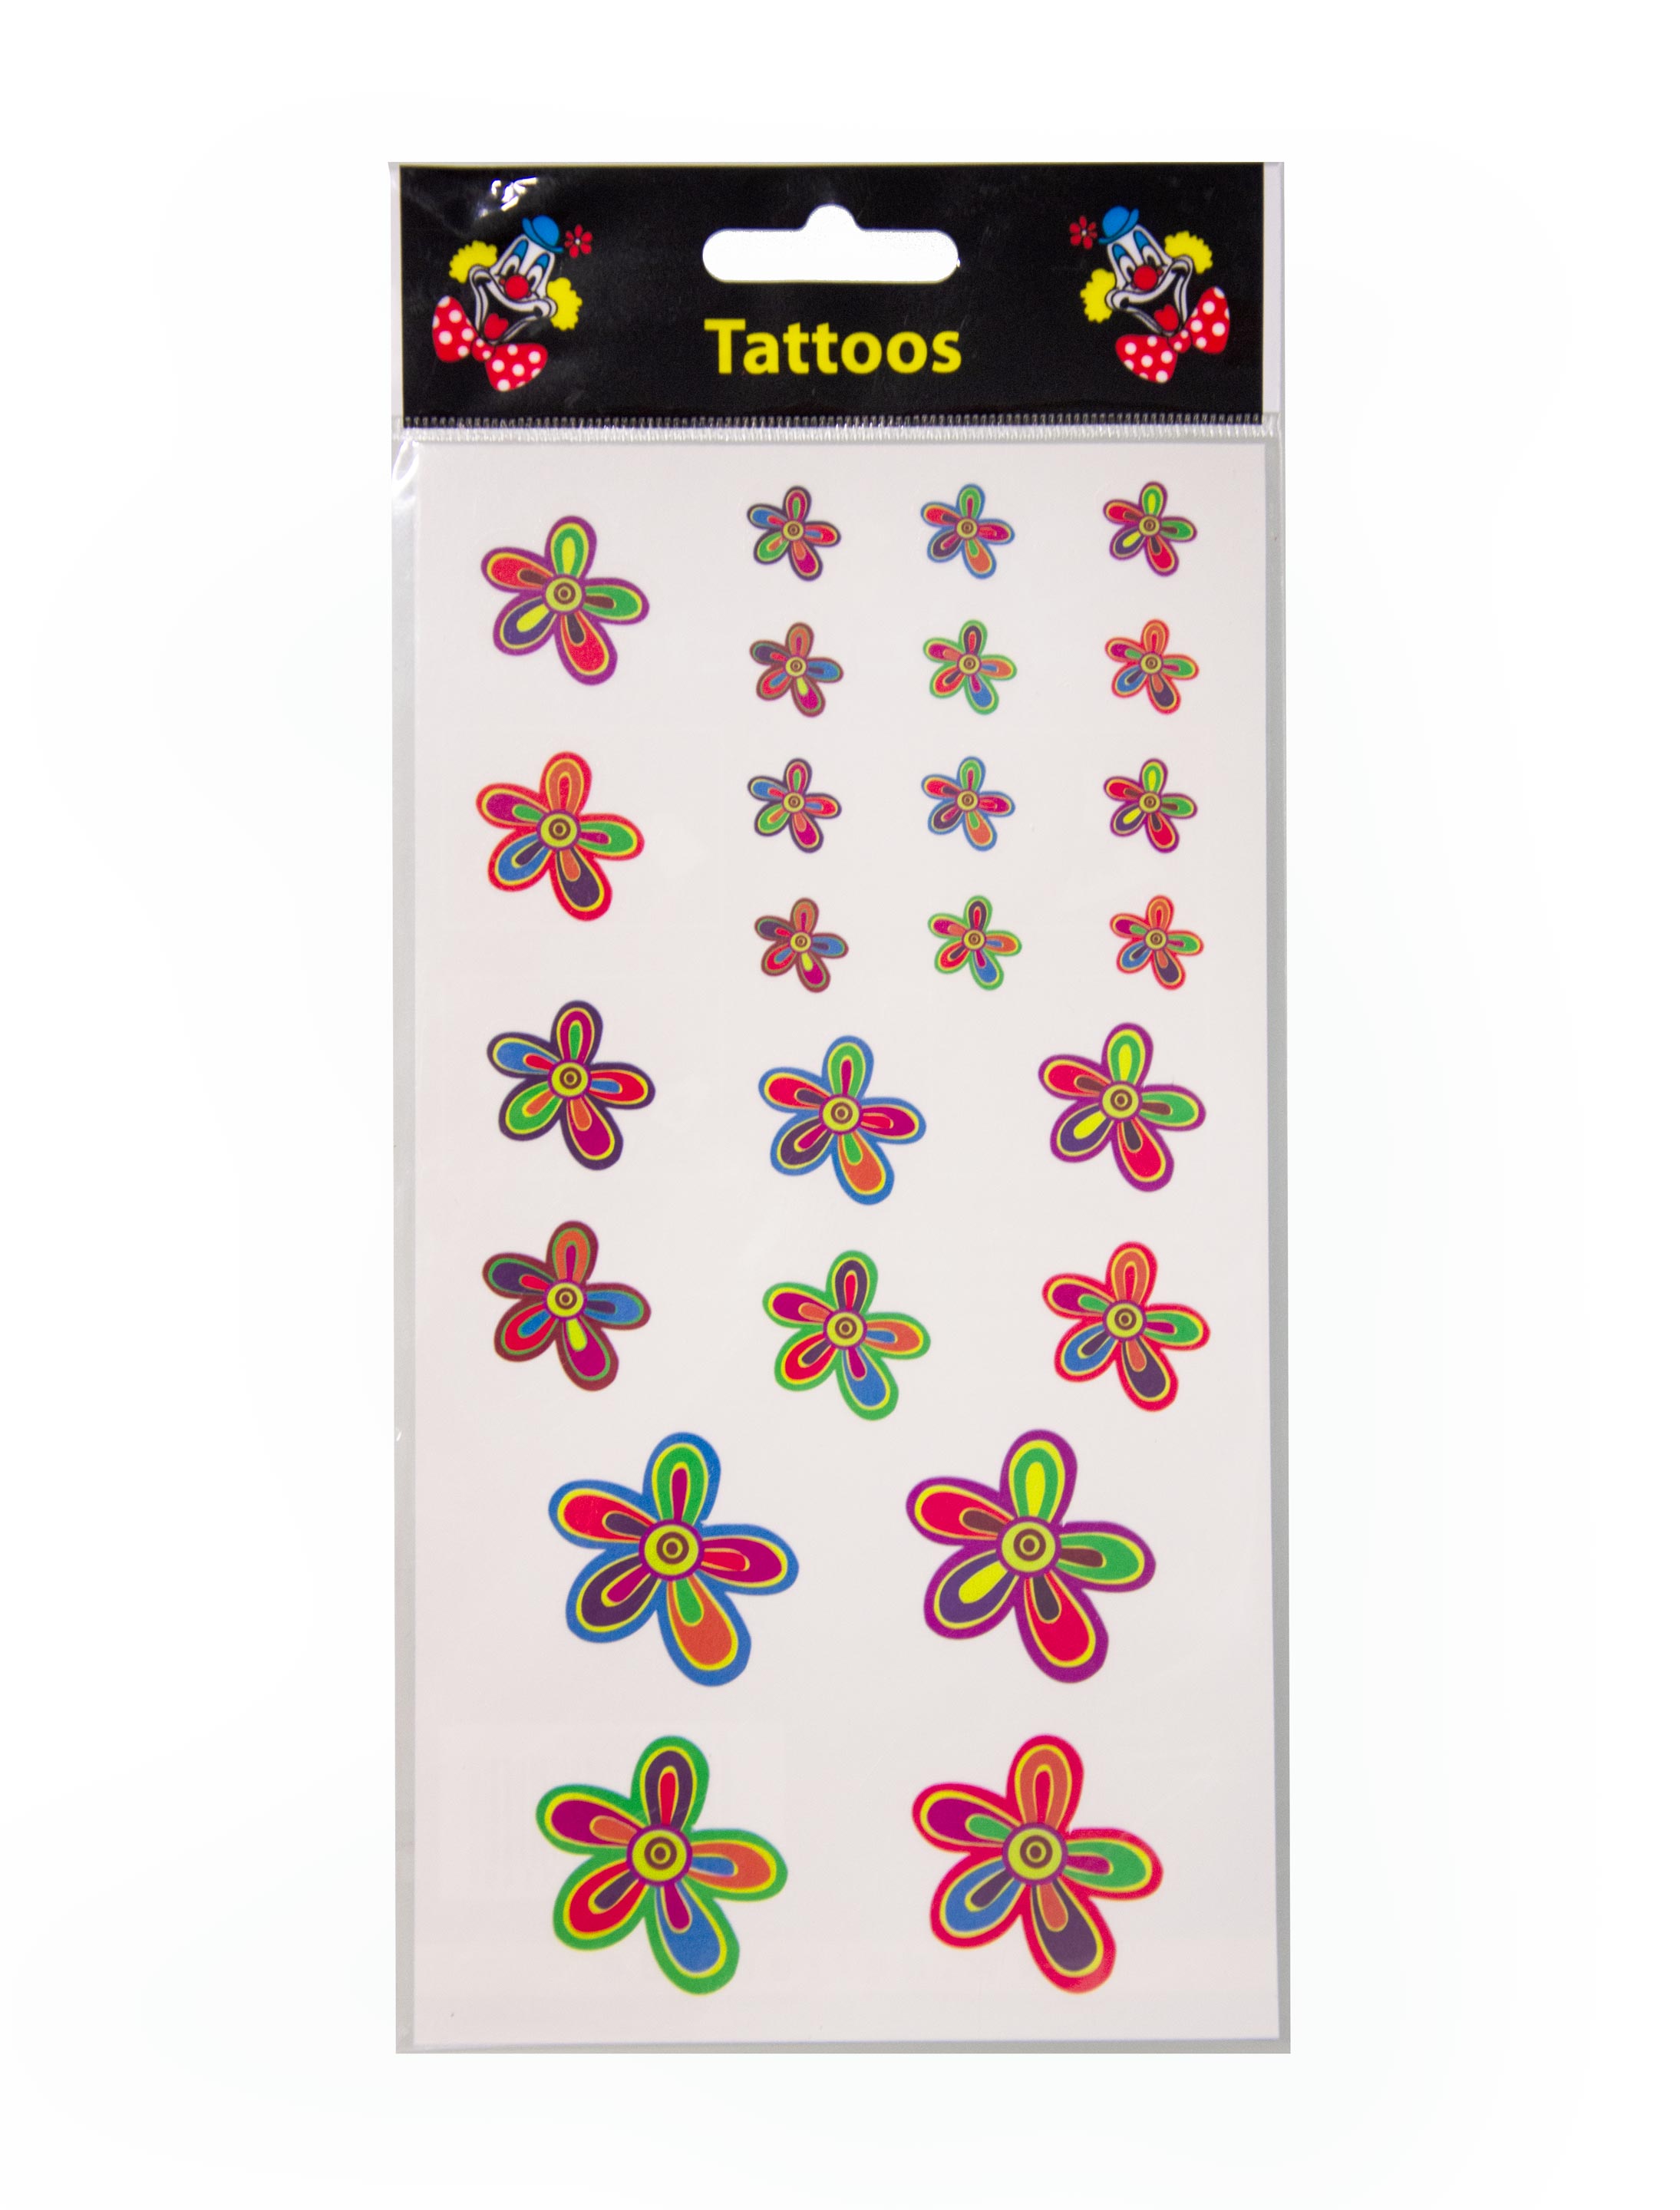 Tattoos Flower Power